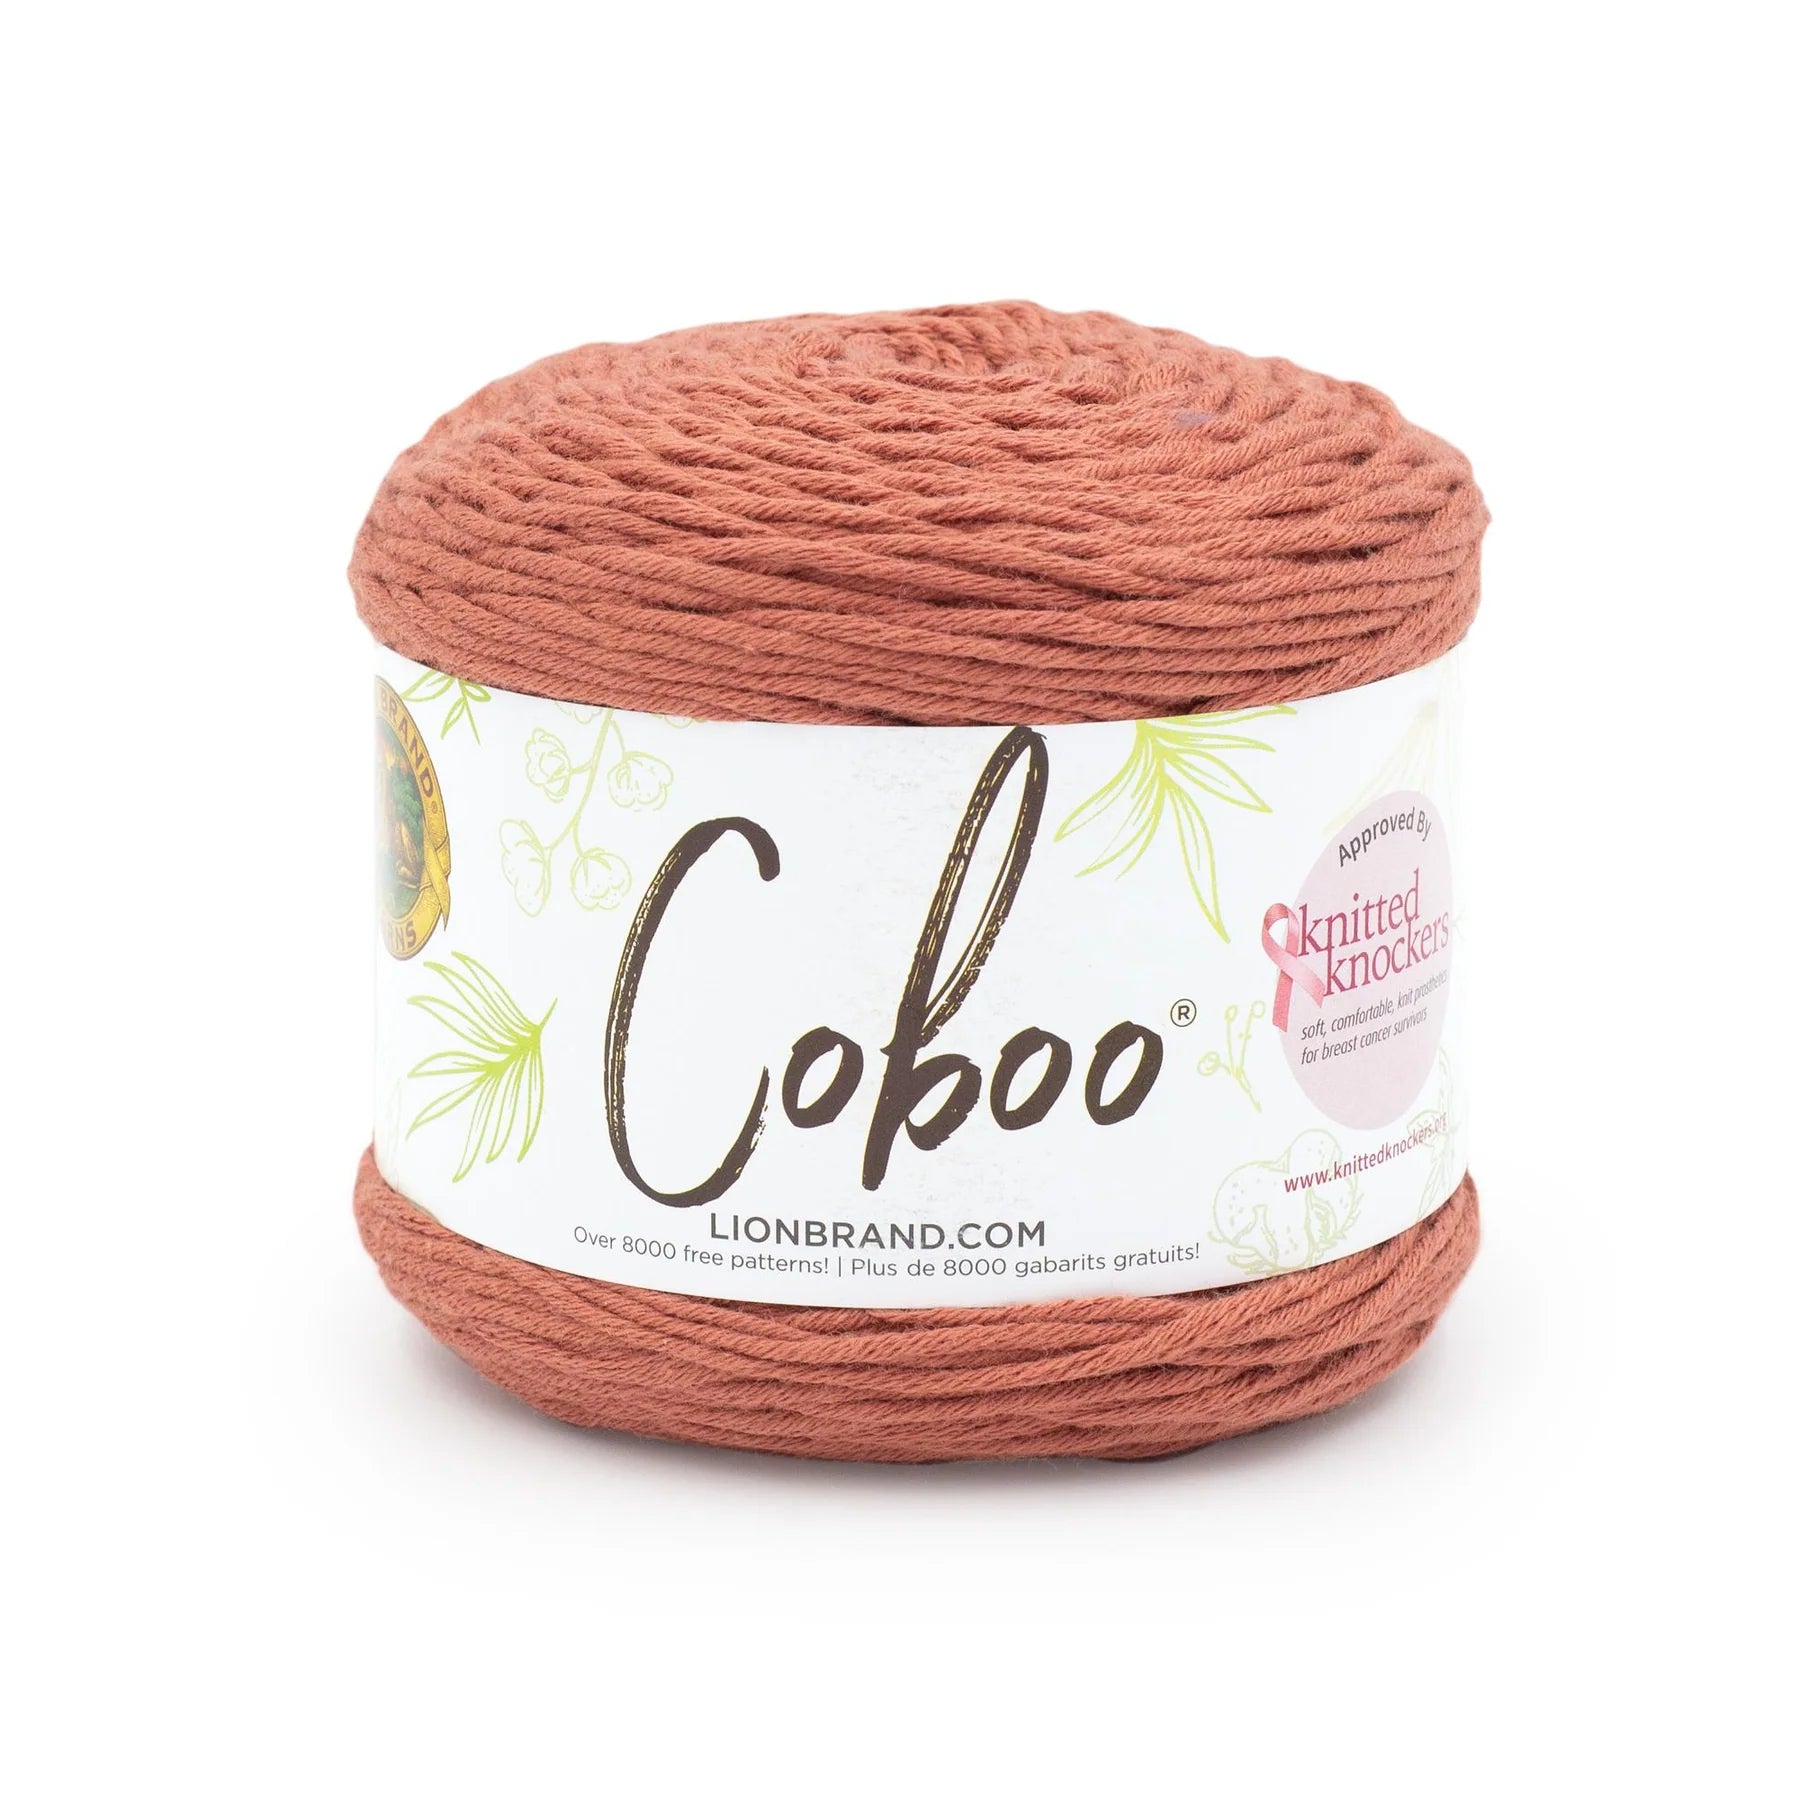 Coboo – Squidgey Yarn Co.